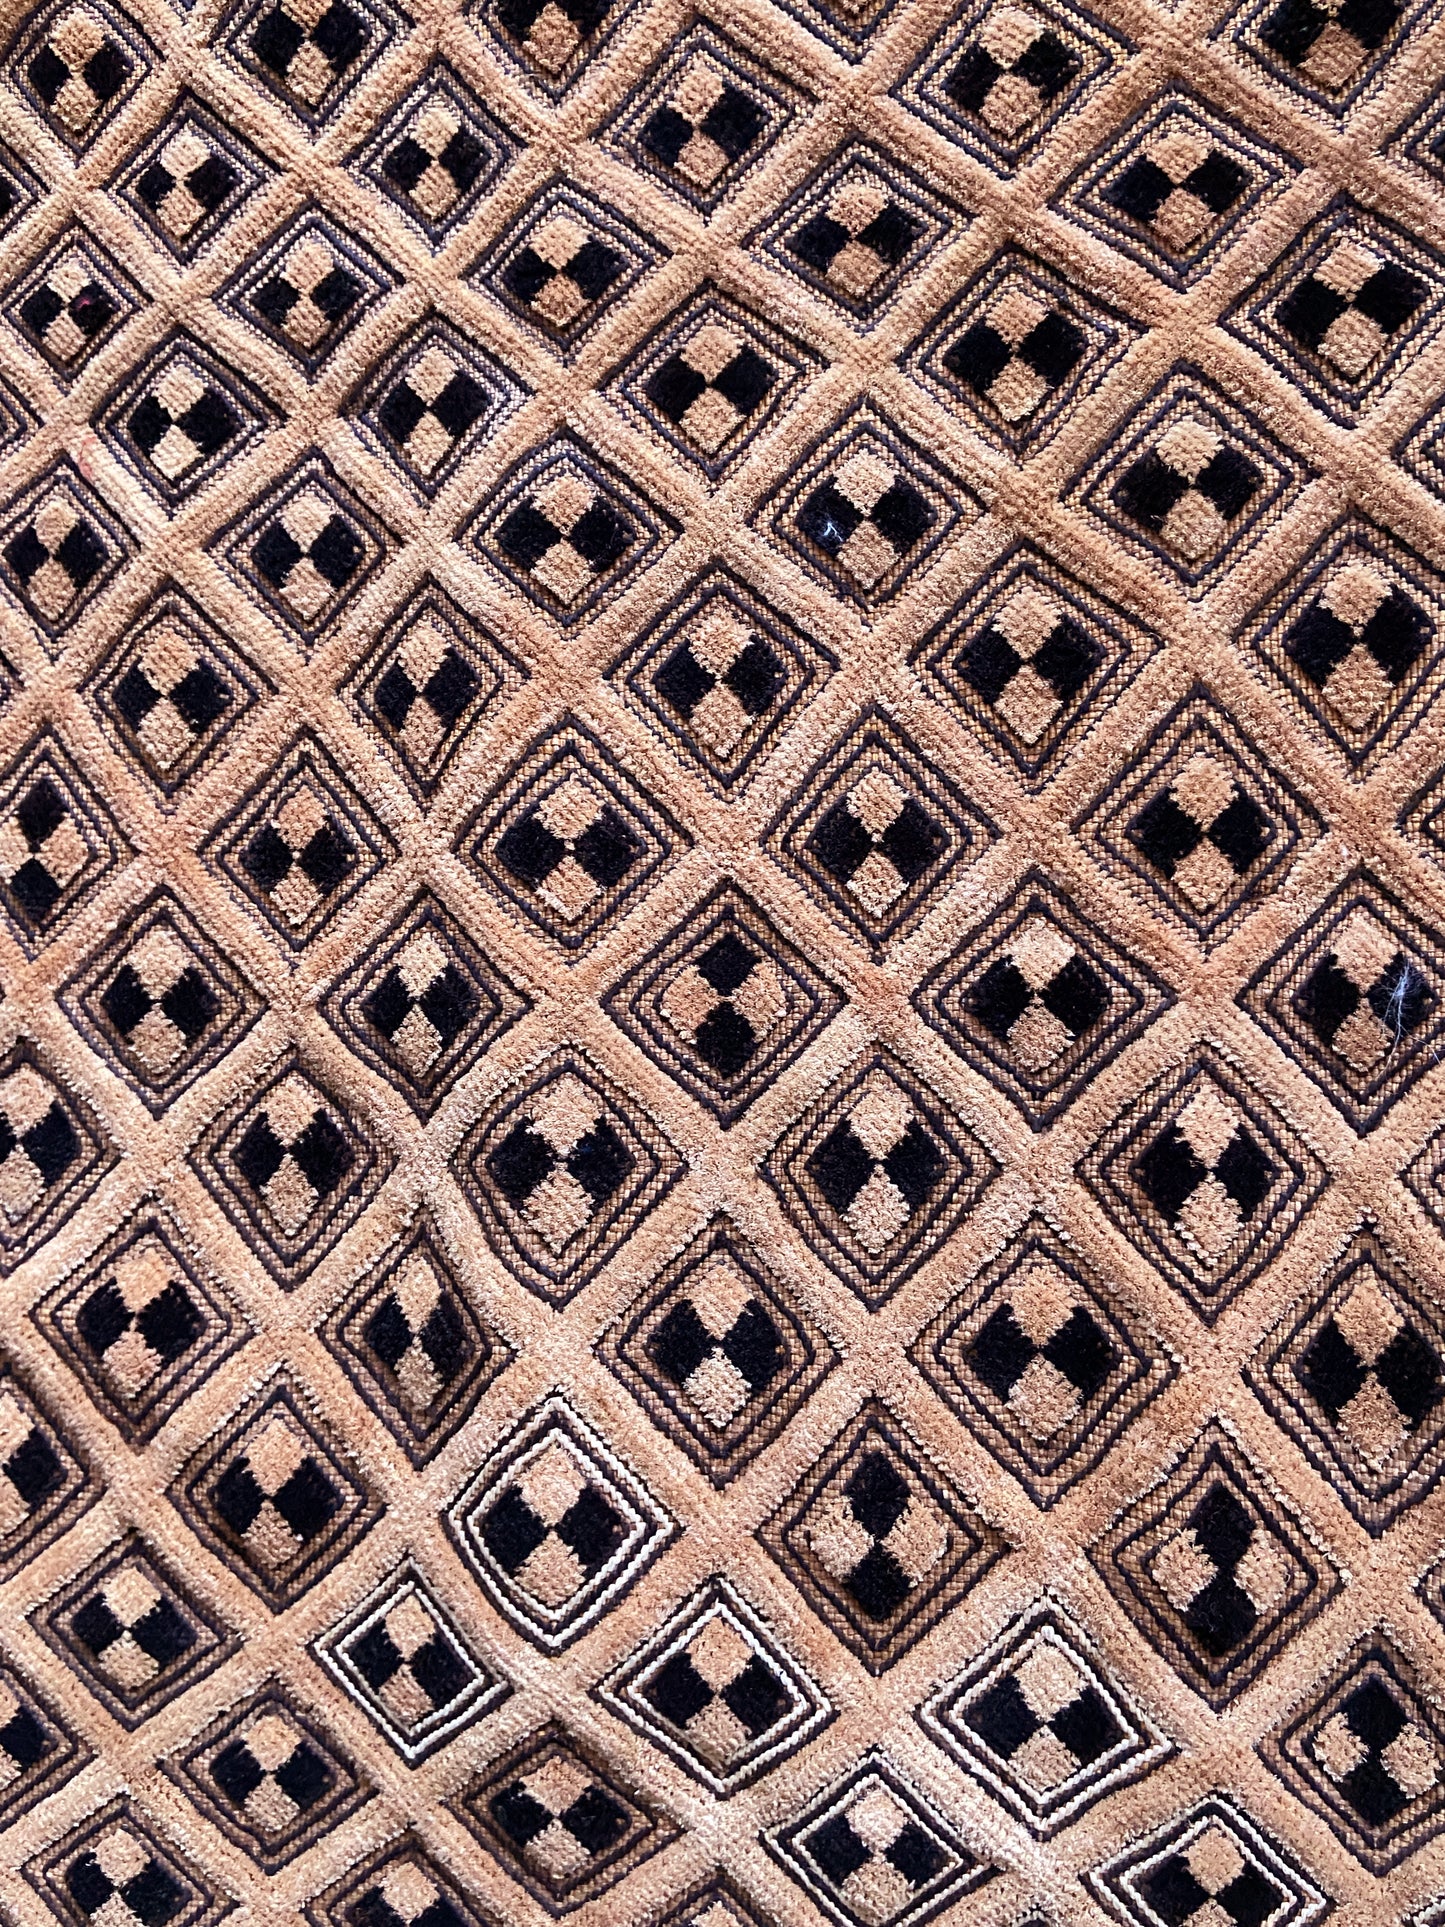 #2004 Kuba Kasai Raffia Textile